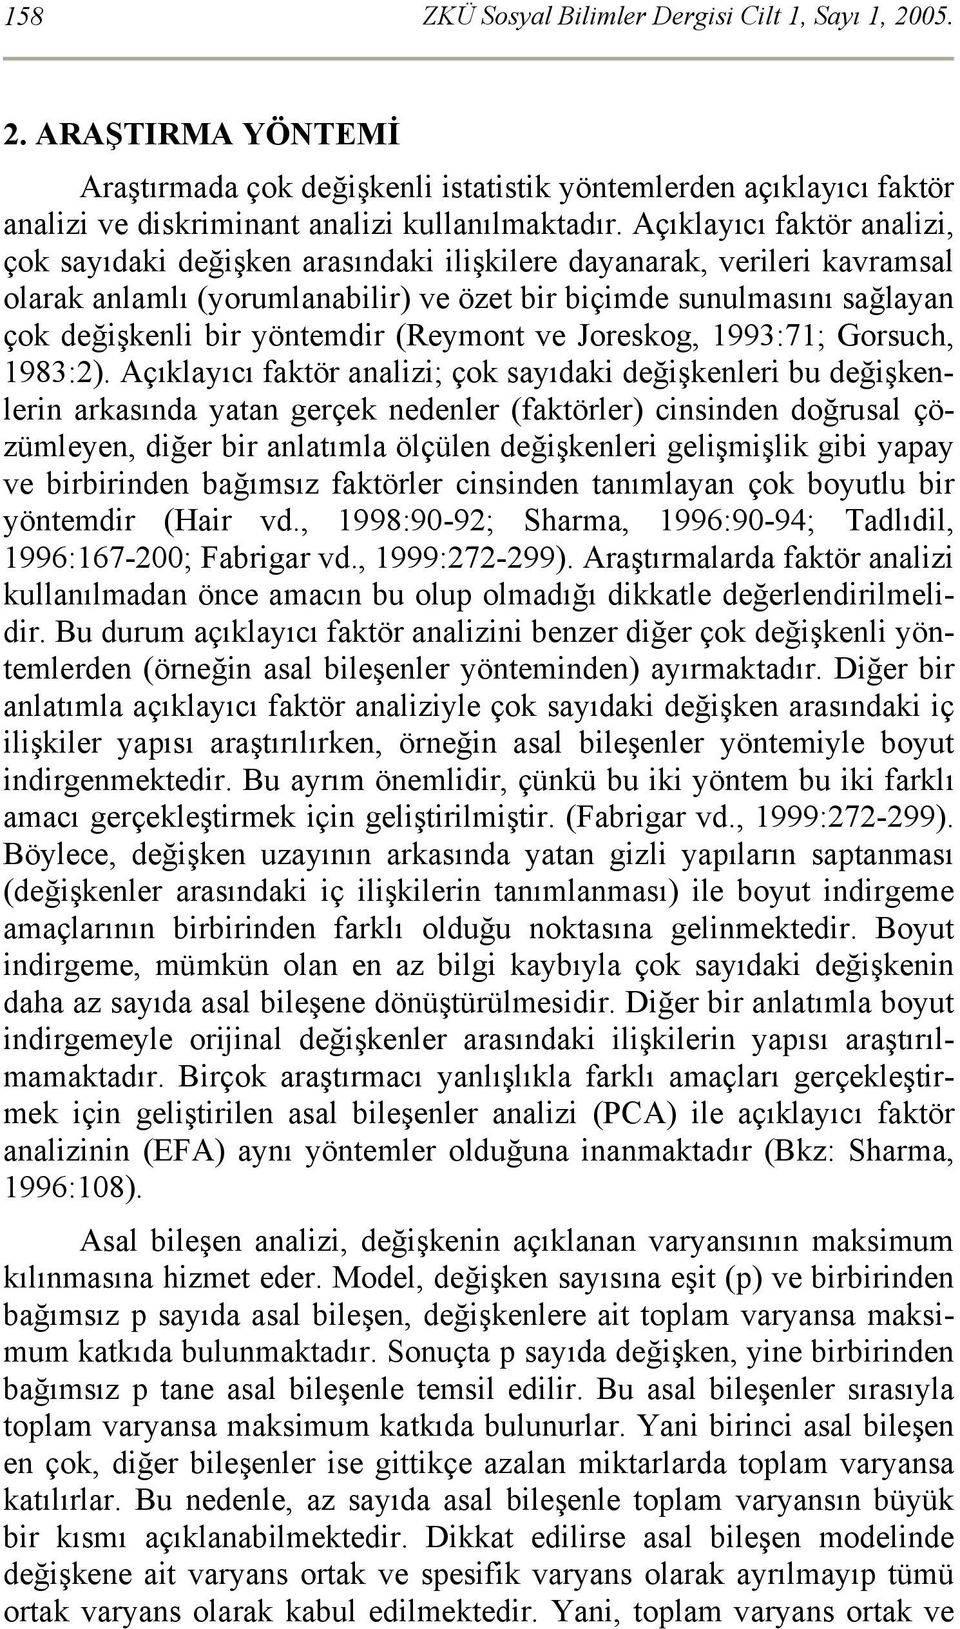 yöntemdir (Reymont ve Joreskog, :71; Gorsuch, 1983:2).